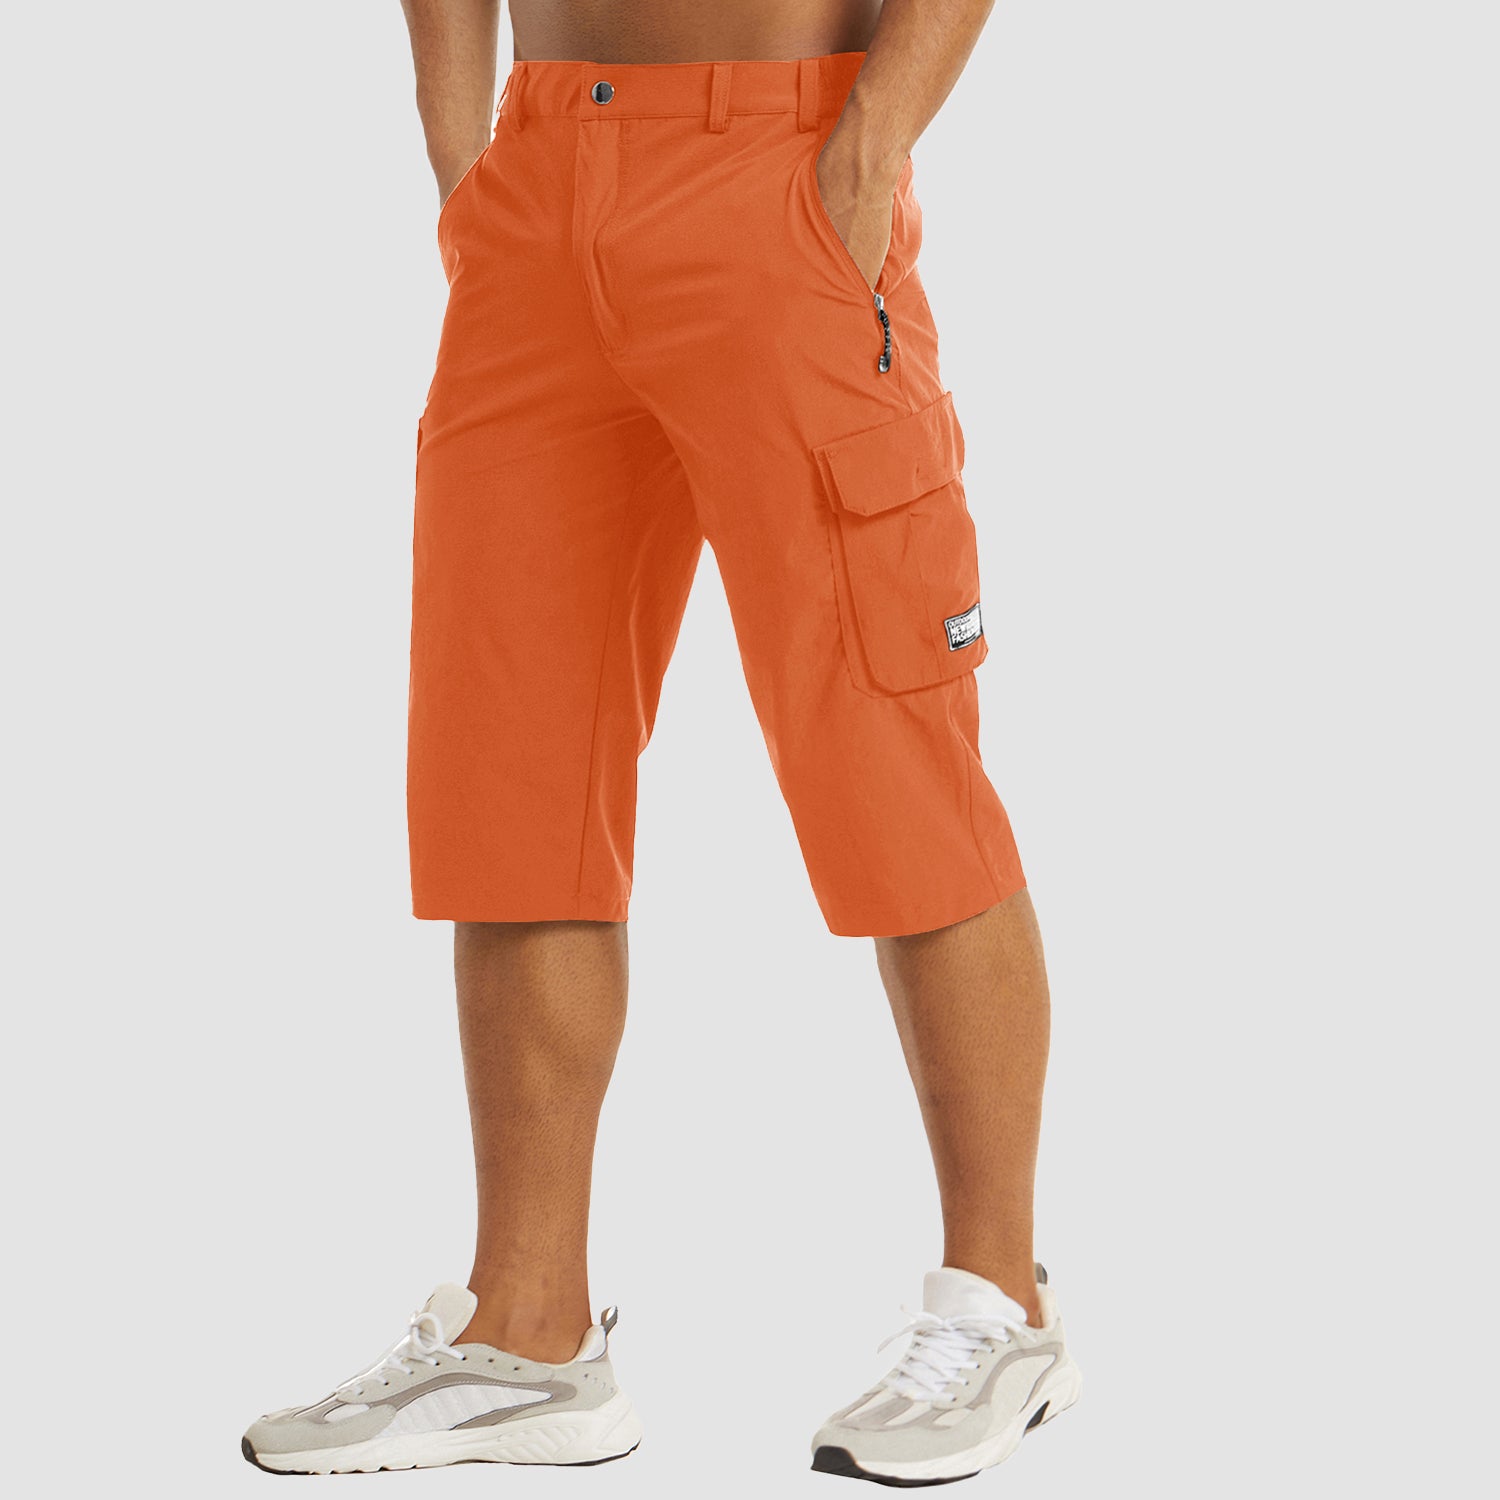 MAGCOMSEN Men's Capri Pants Twill Elastic Below Knee Cargo Shorts with 7  Pockets